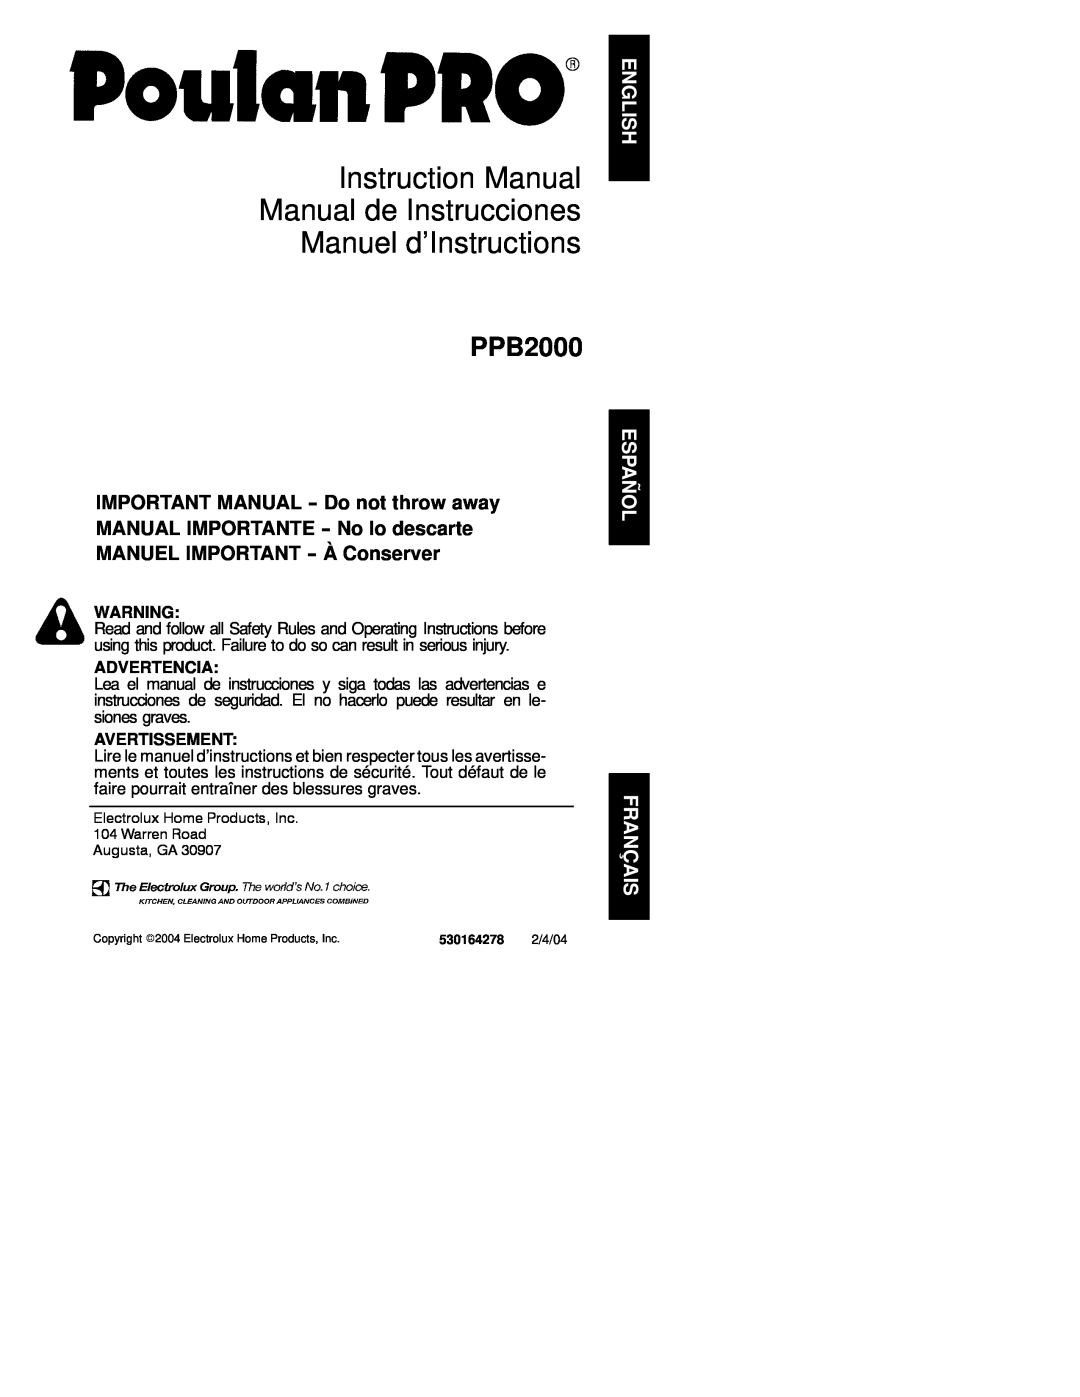 Poulan PPB2000 instruction manual Advertencia, Avertissement 